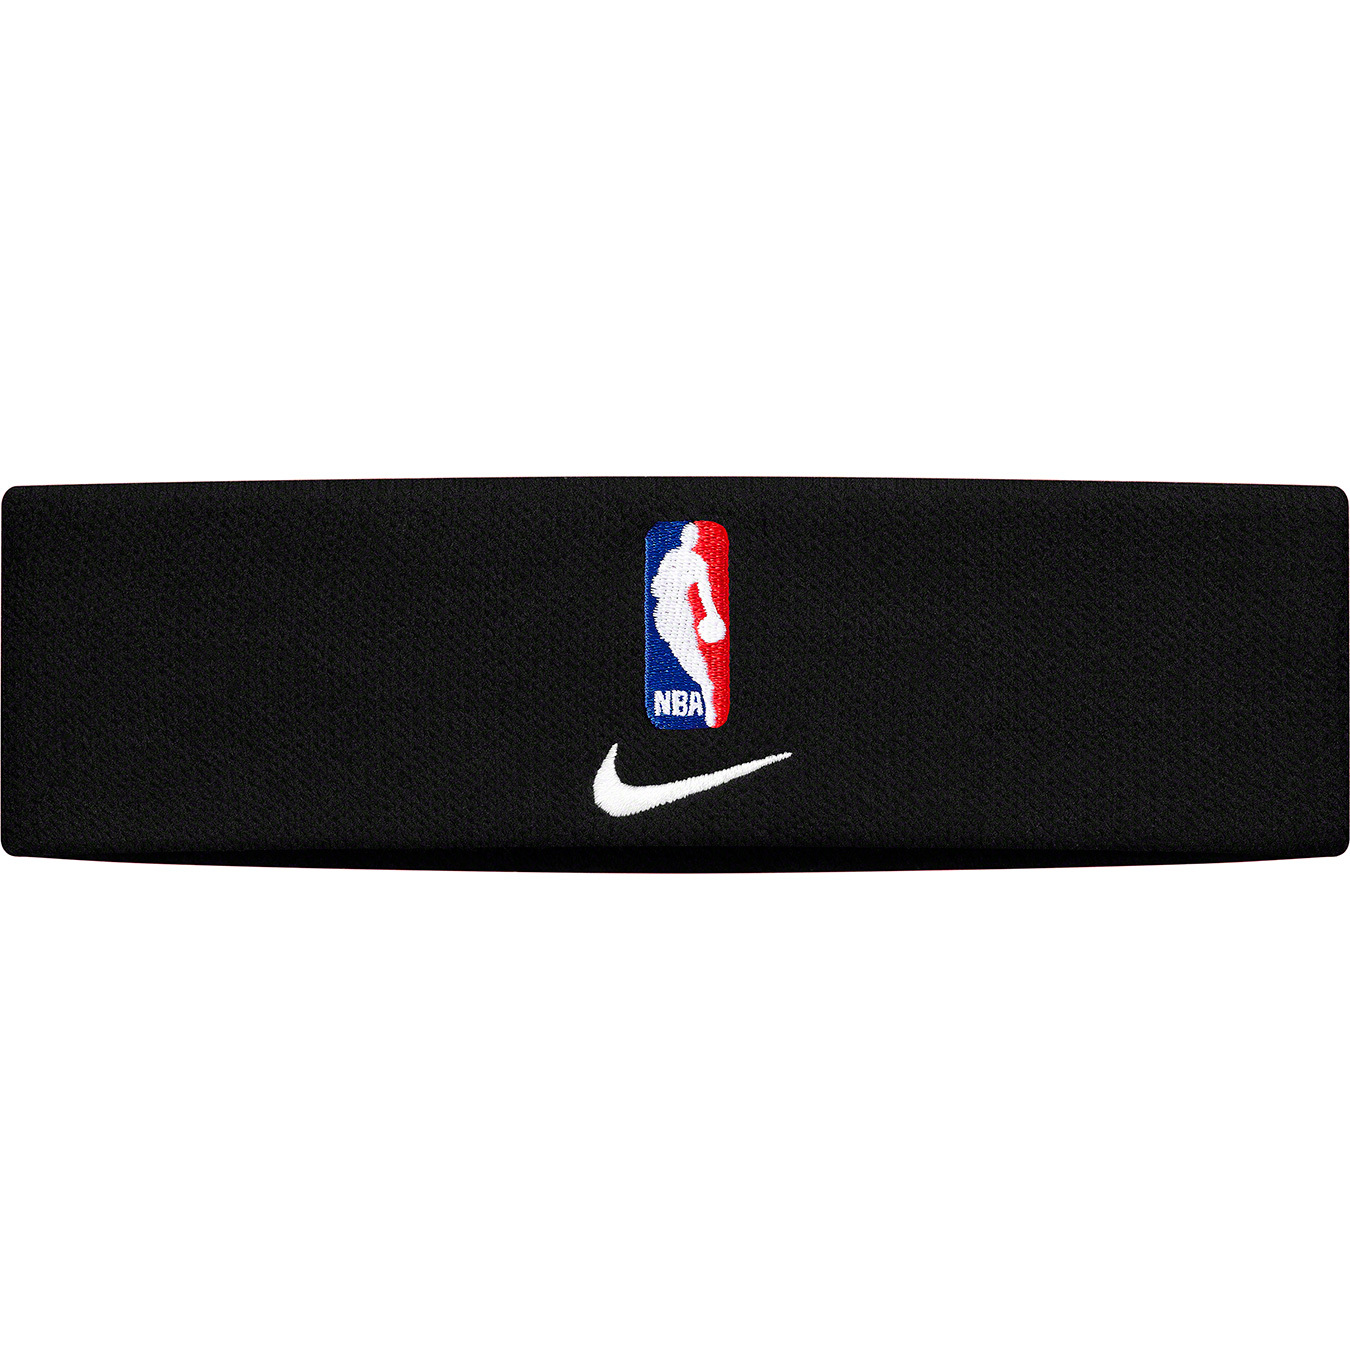 Supreme®/Nike®/NBA Headband - Supreme Community